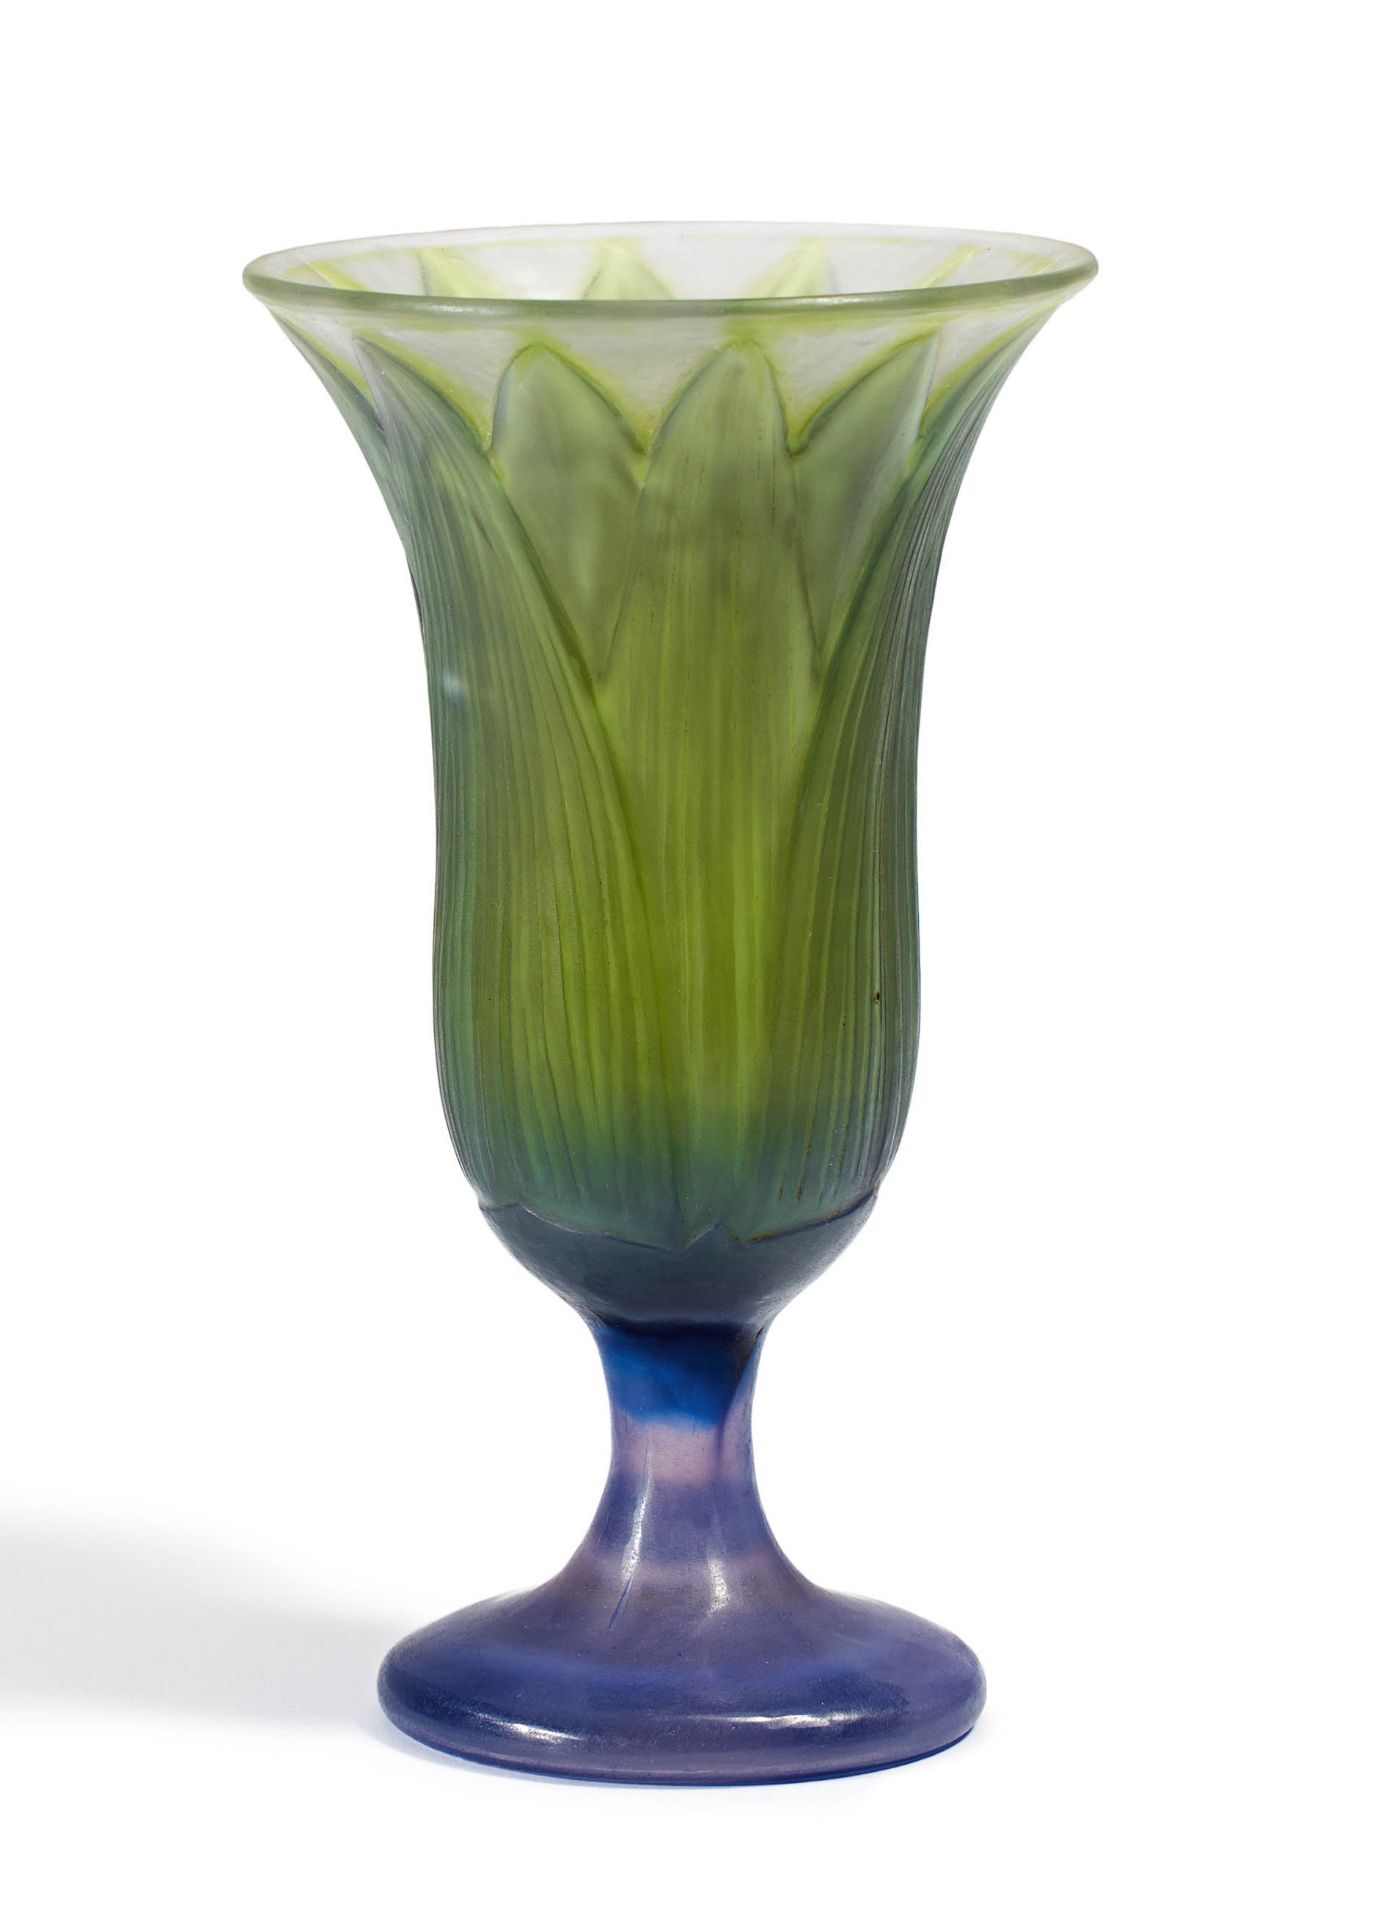 Stem glass with lotus petals